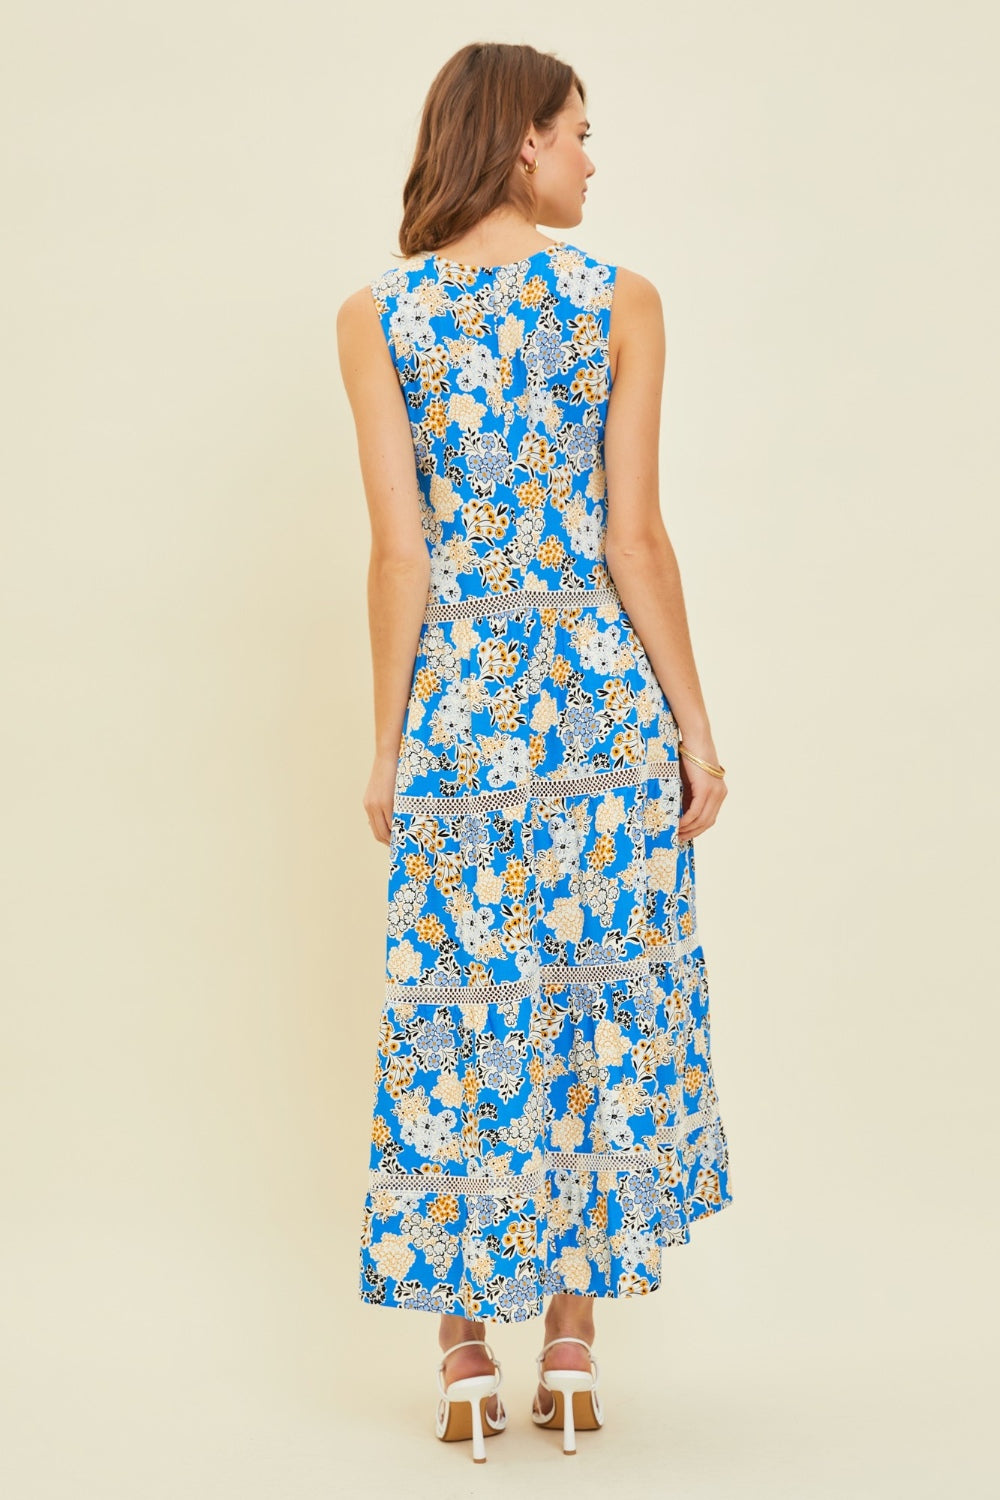 Beach Wedding Guest Attire: Elegant Full-Length Maxi Dress with Crochet Detailing